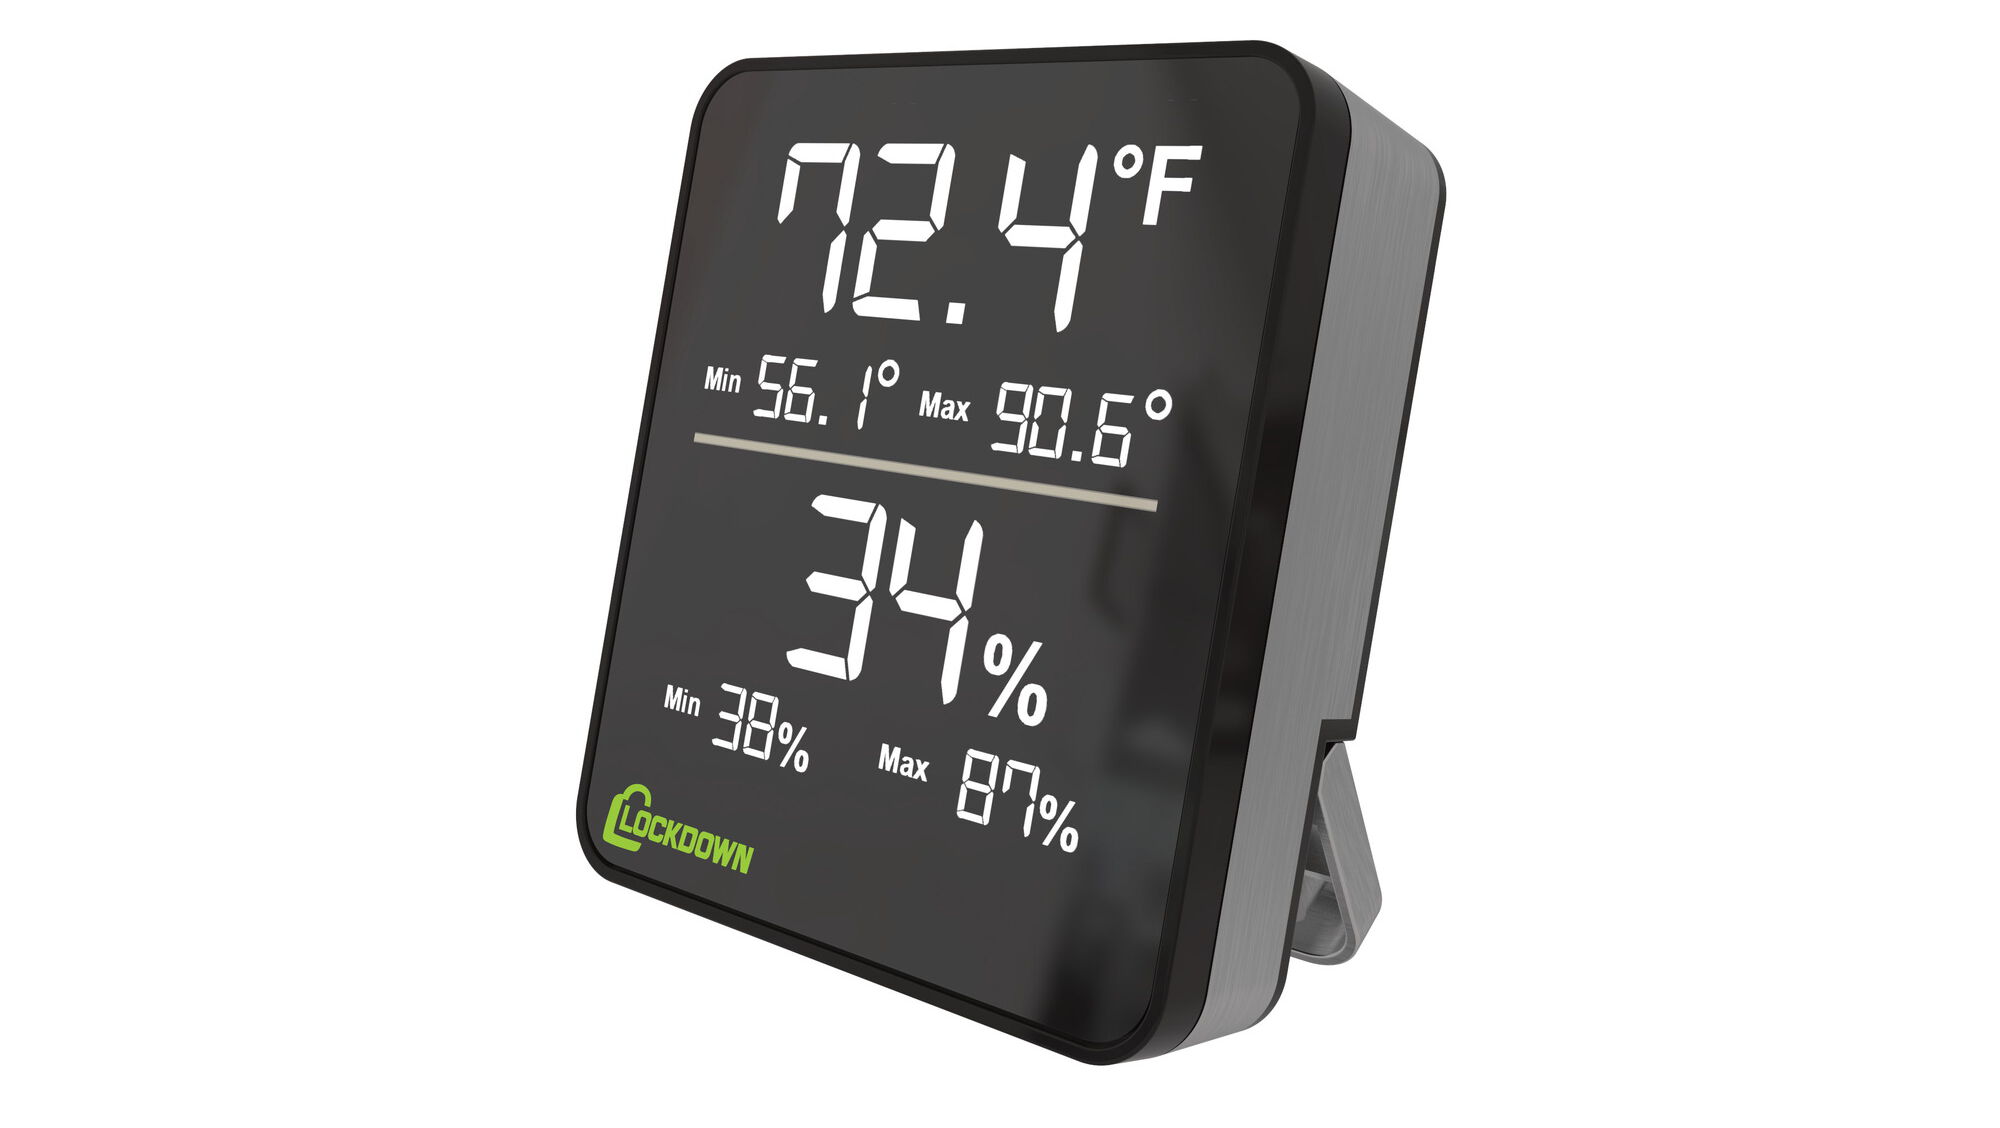 Digital Thermo-Hygrometer & Clock